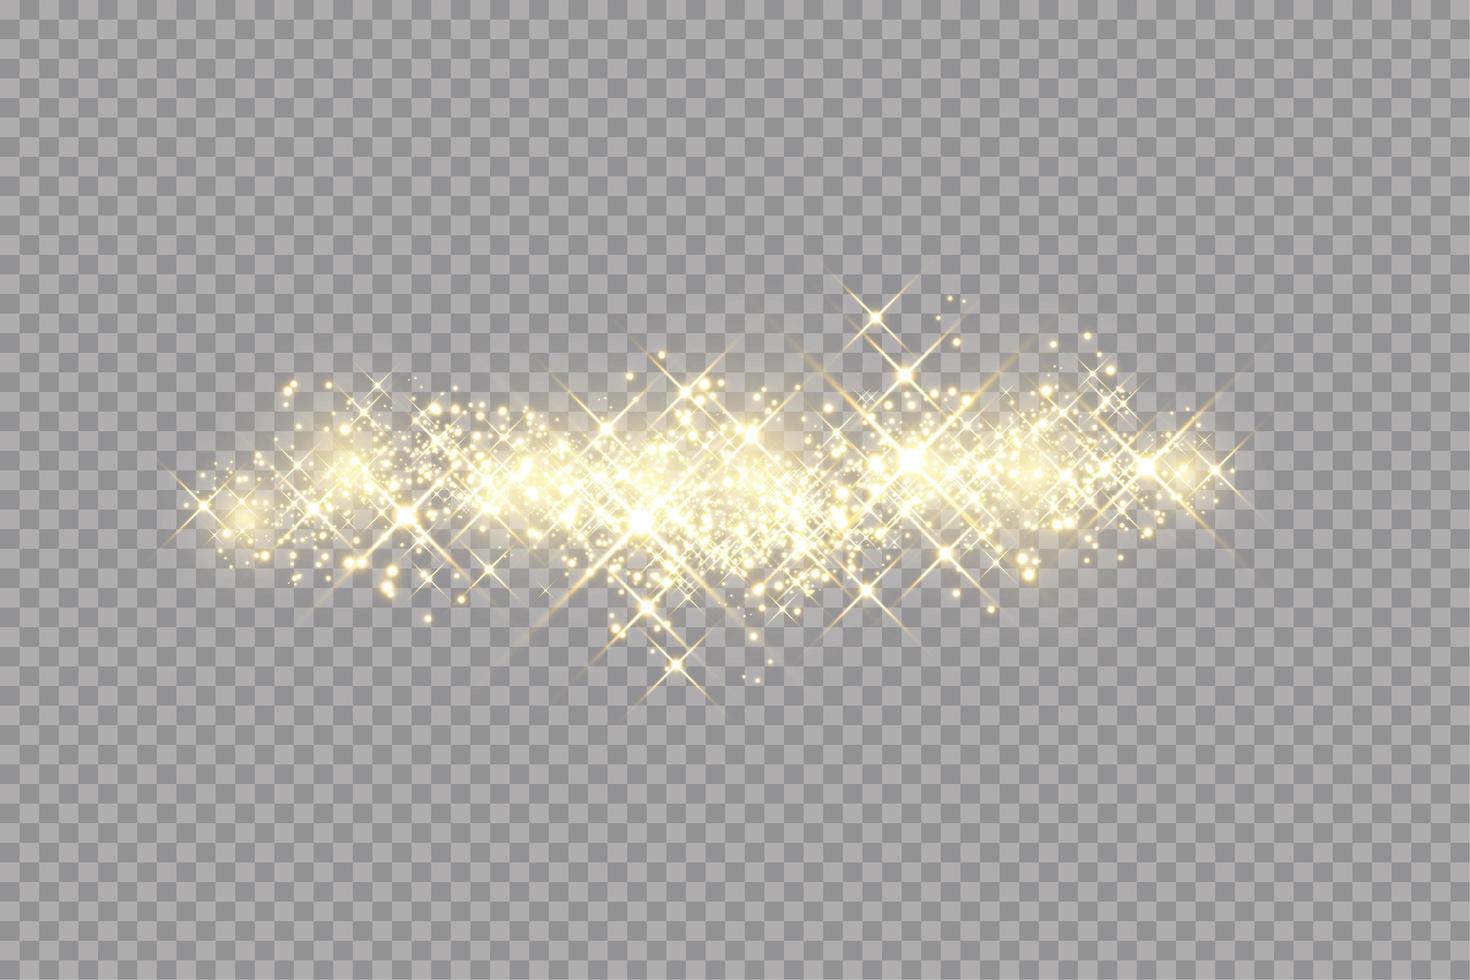 Golden sparks glitter special light effect vector